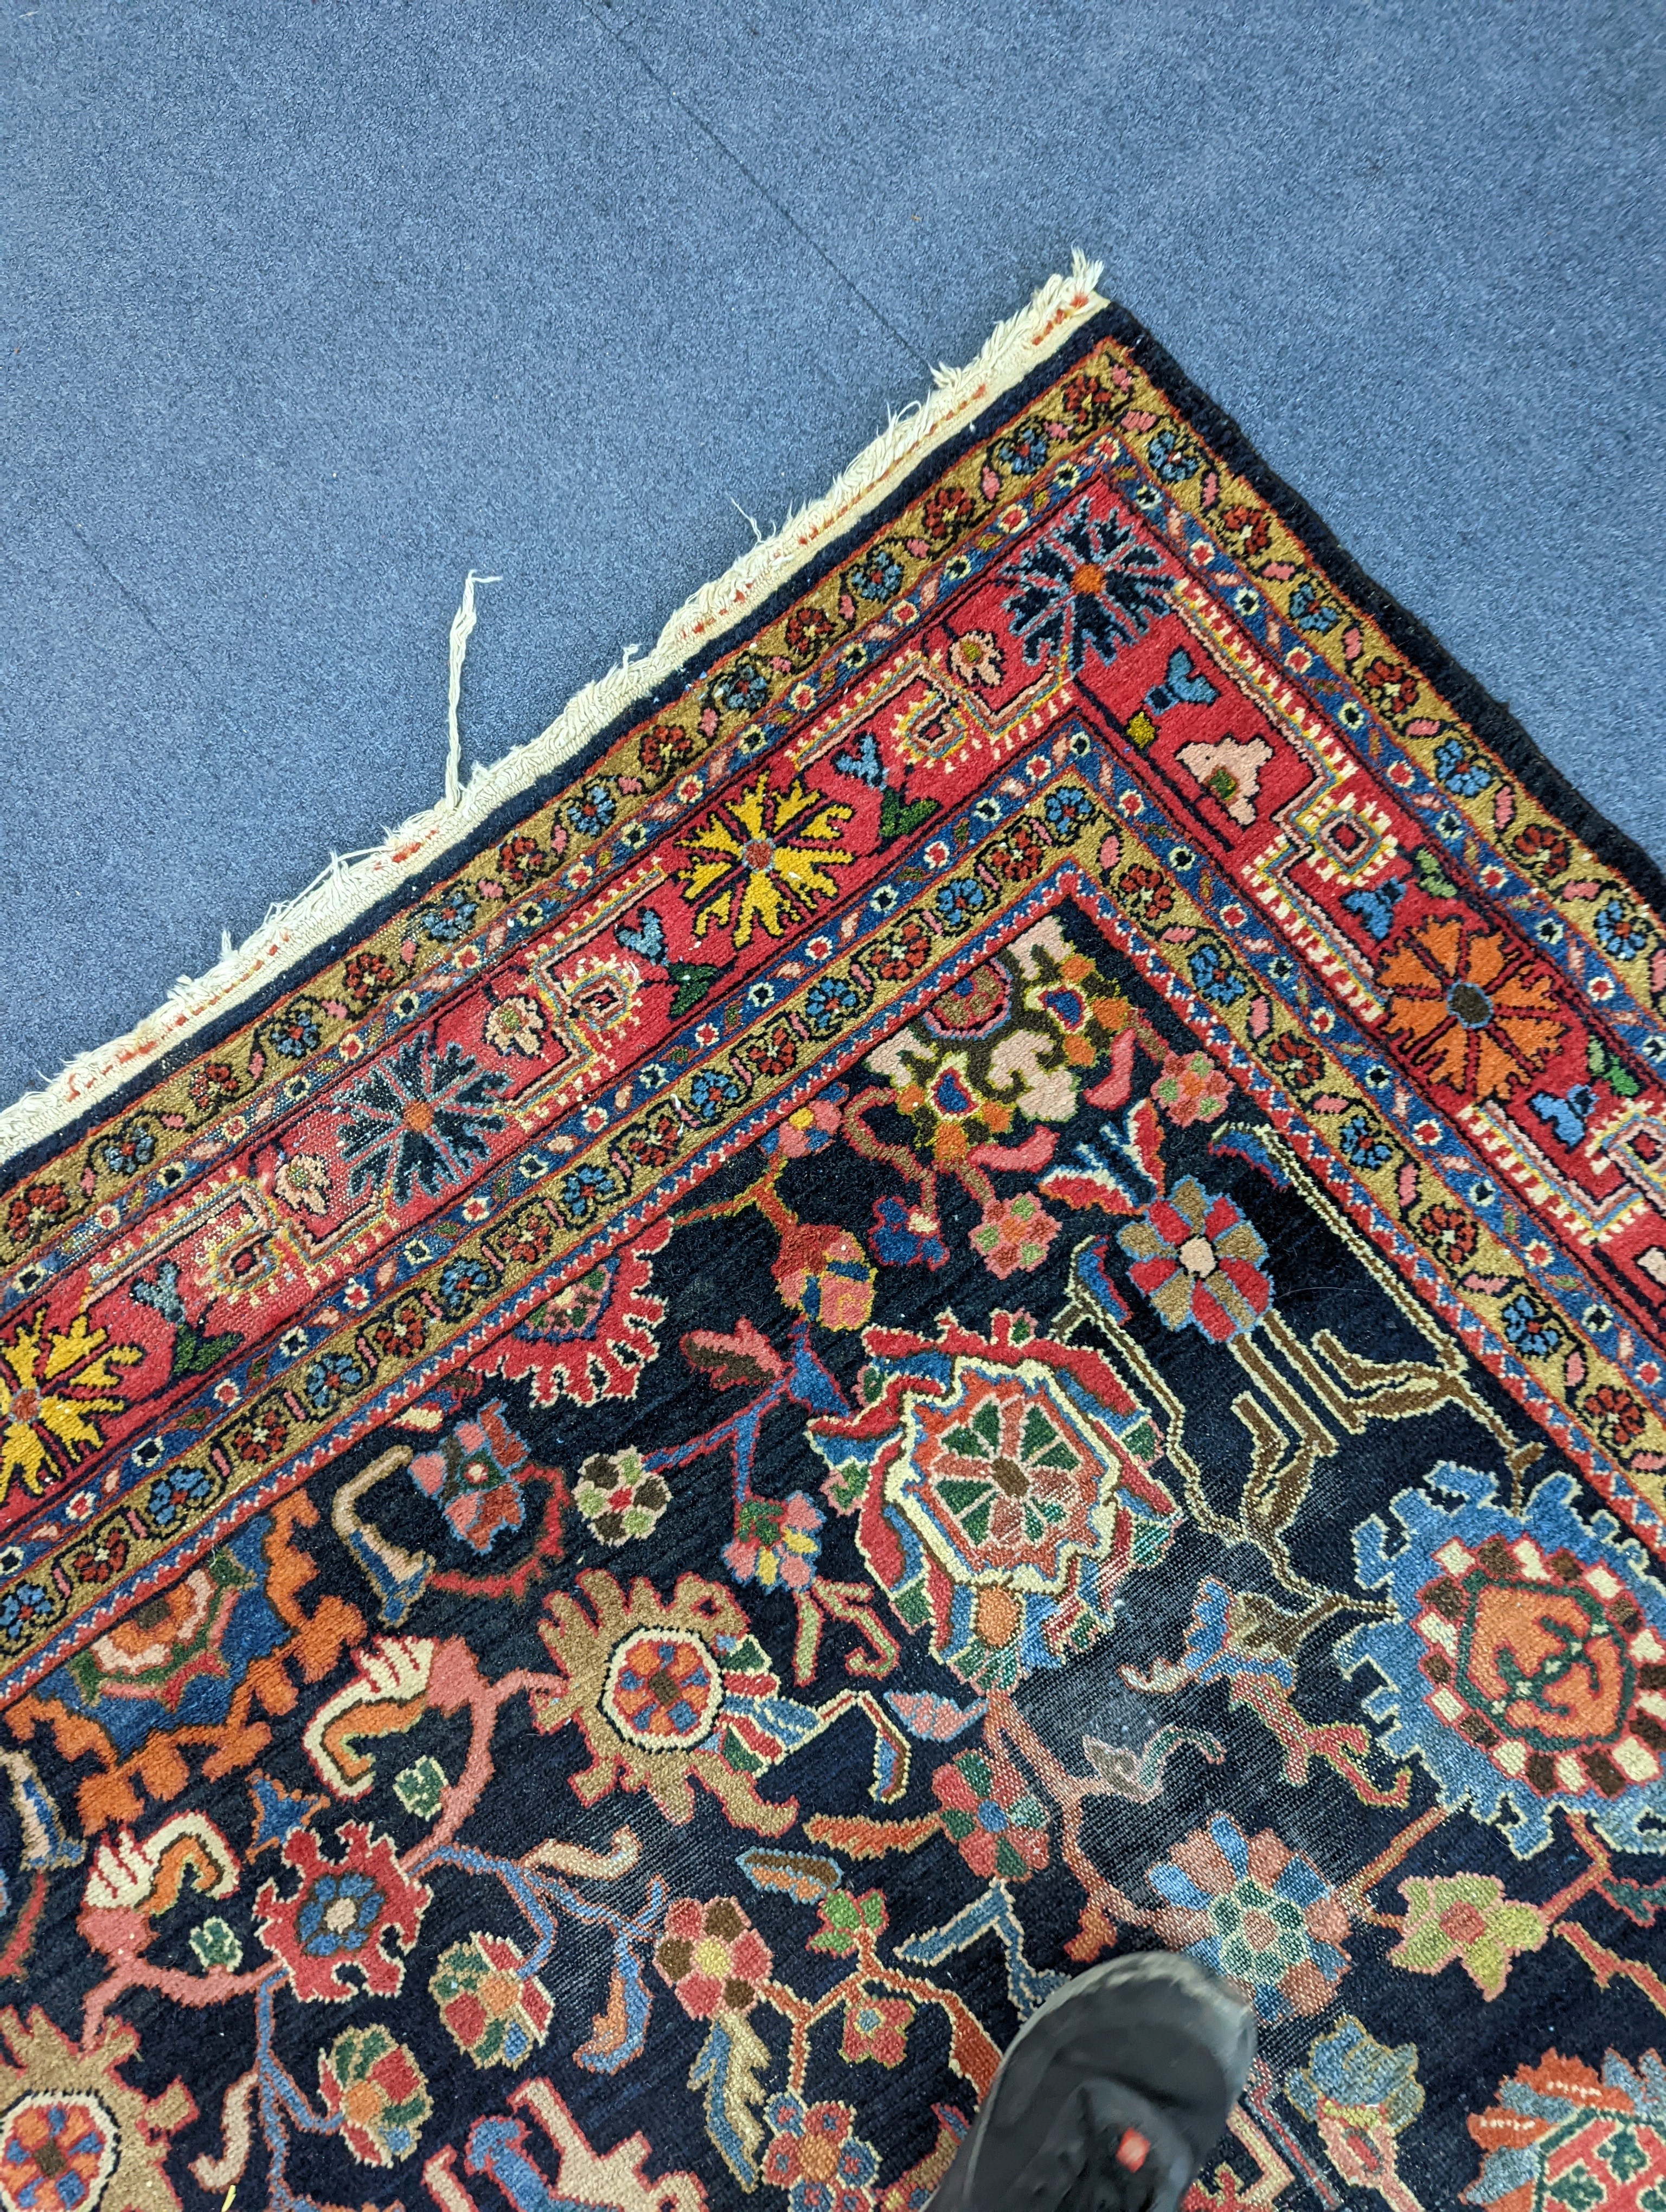 A Heriz / Moghal blue ground carpet, 340 x 206cm